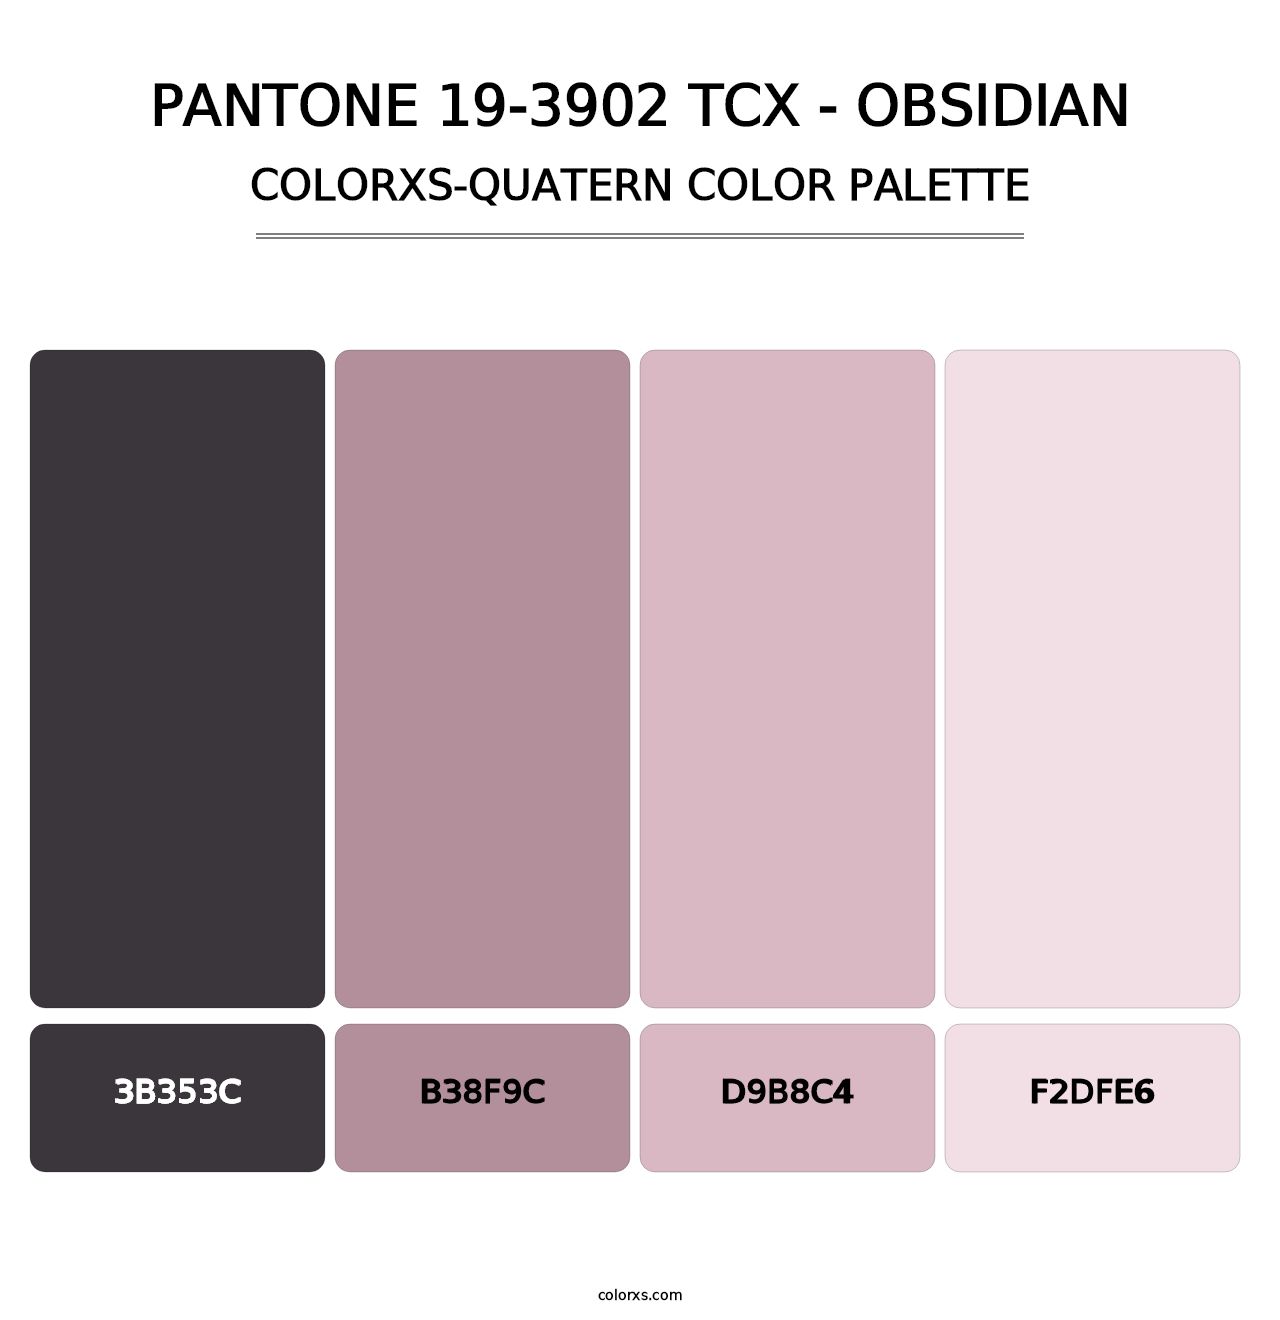 PANTONE 19-3902 TCX - Obsidian - Colorxs Quatern Palette